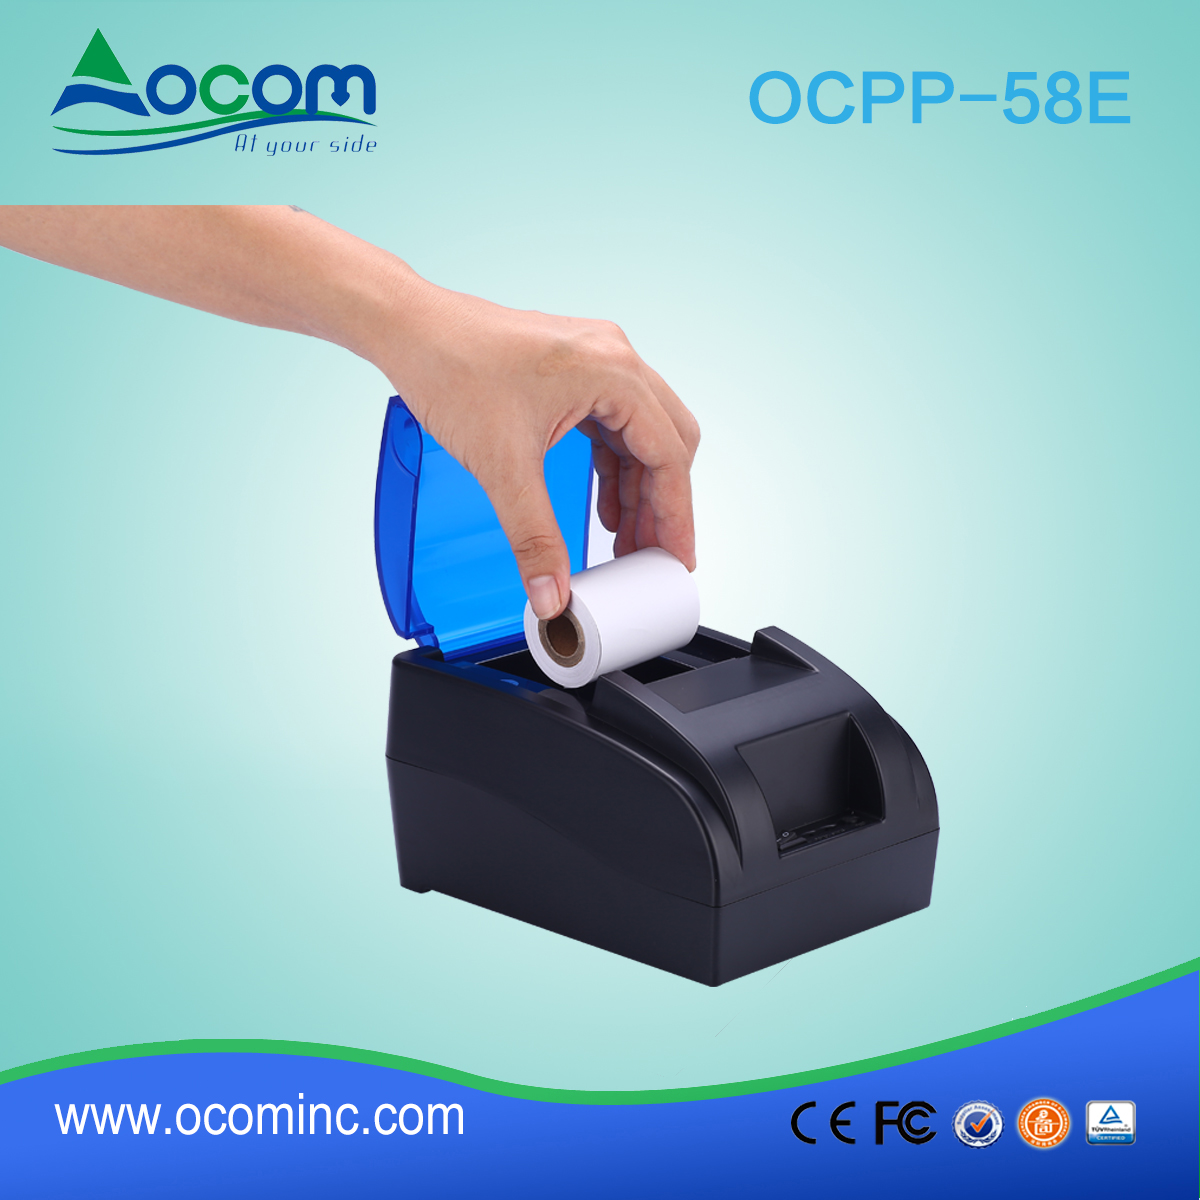 OCPP -58E Stampante termica per ricevute termica bluetooth per Android da 2 pollici con stampa di codici a barre